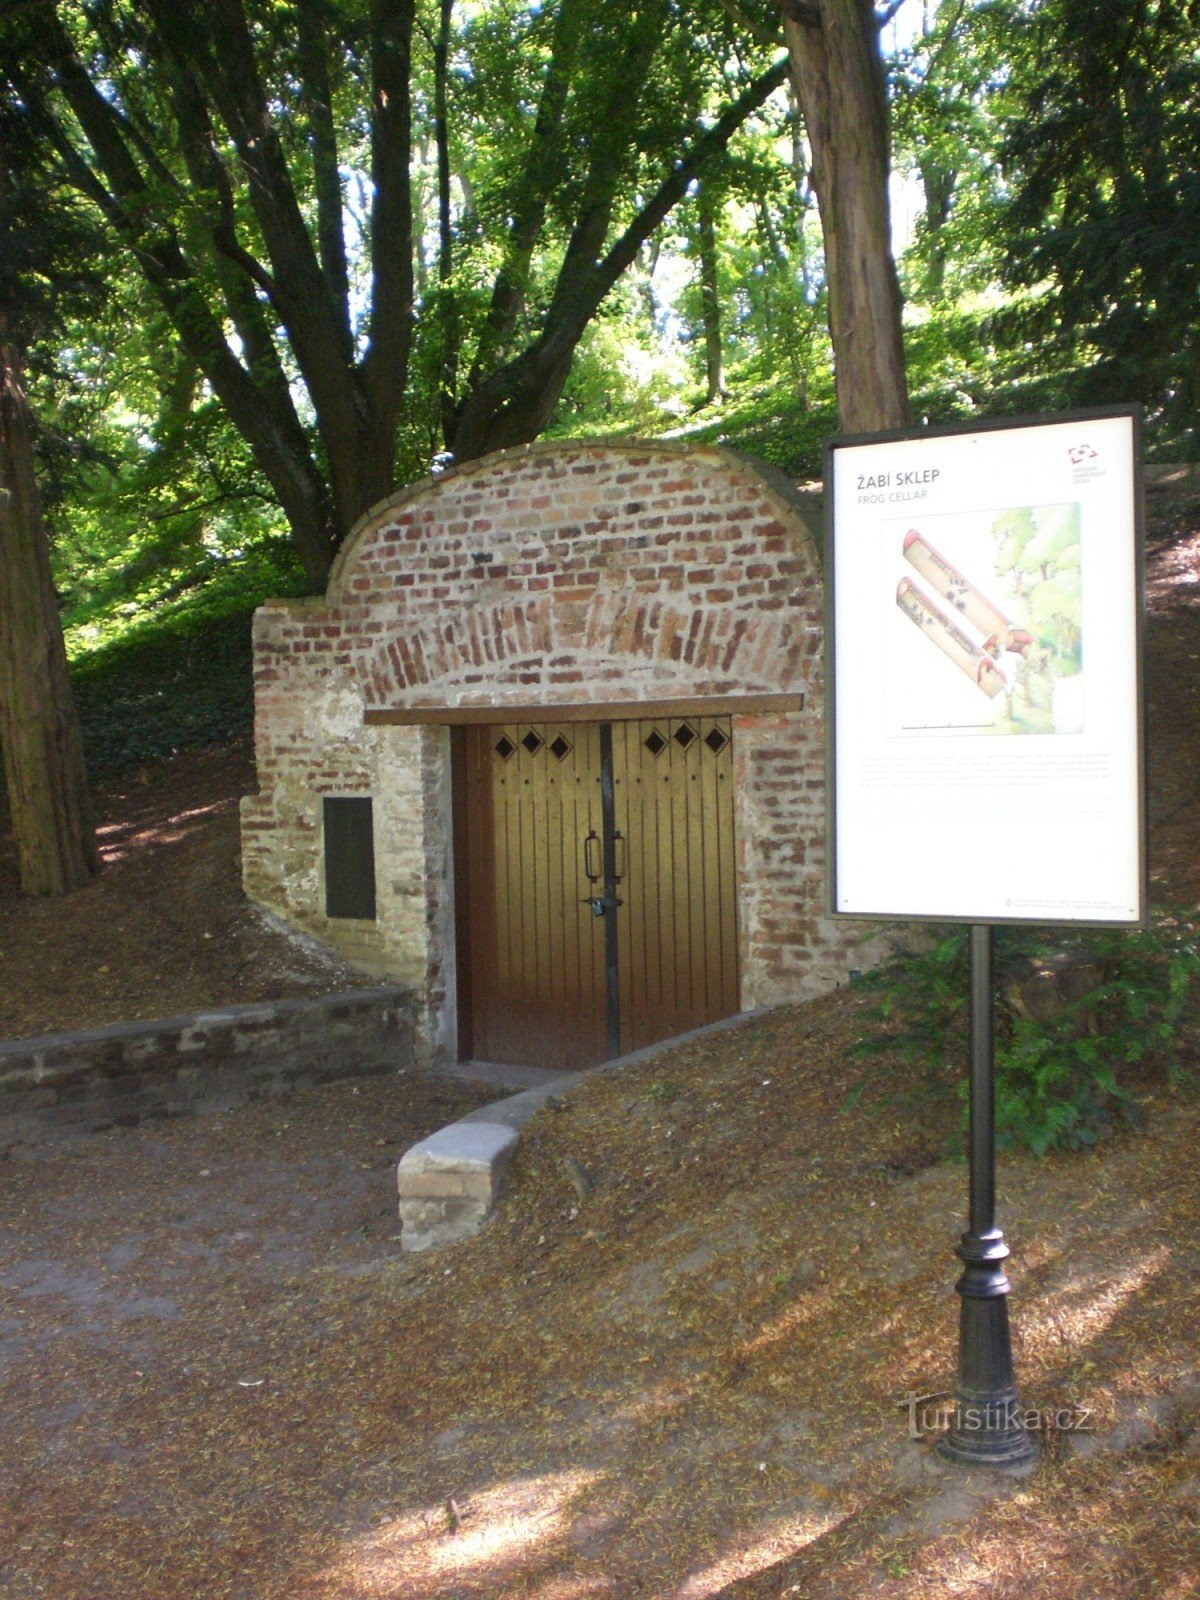 kikkerkelder in het kasteelpark